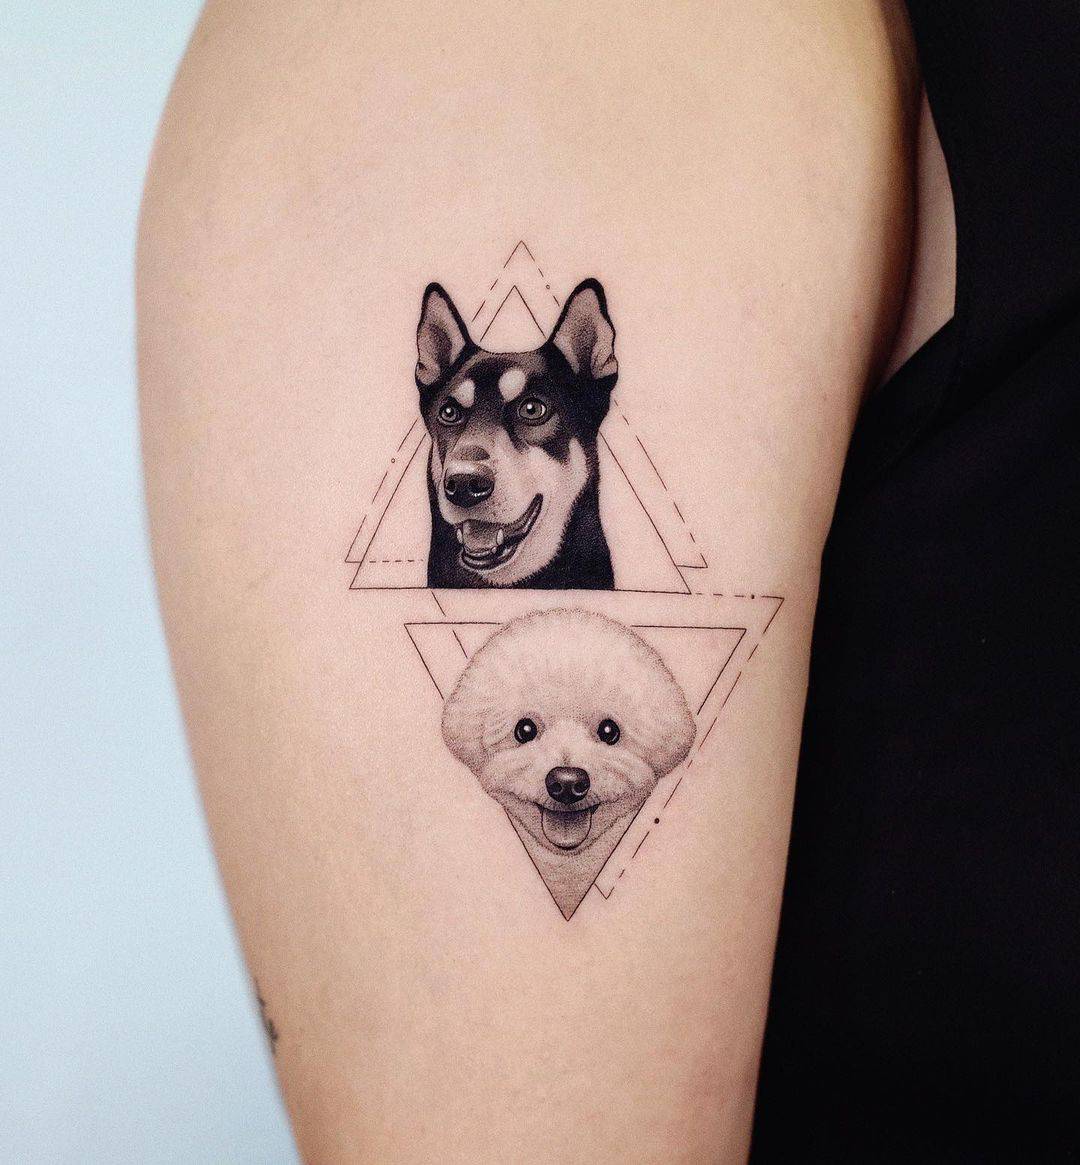 Dogs tattoo in geometric shape by zeal tattoo